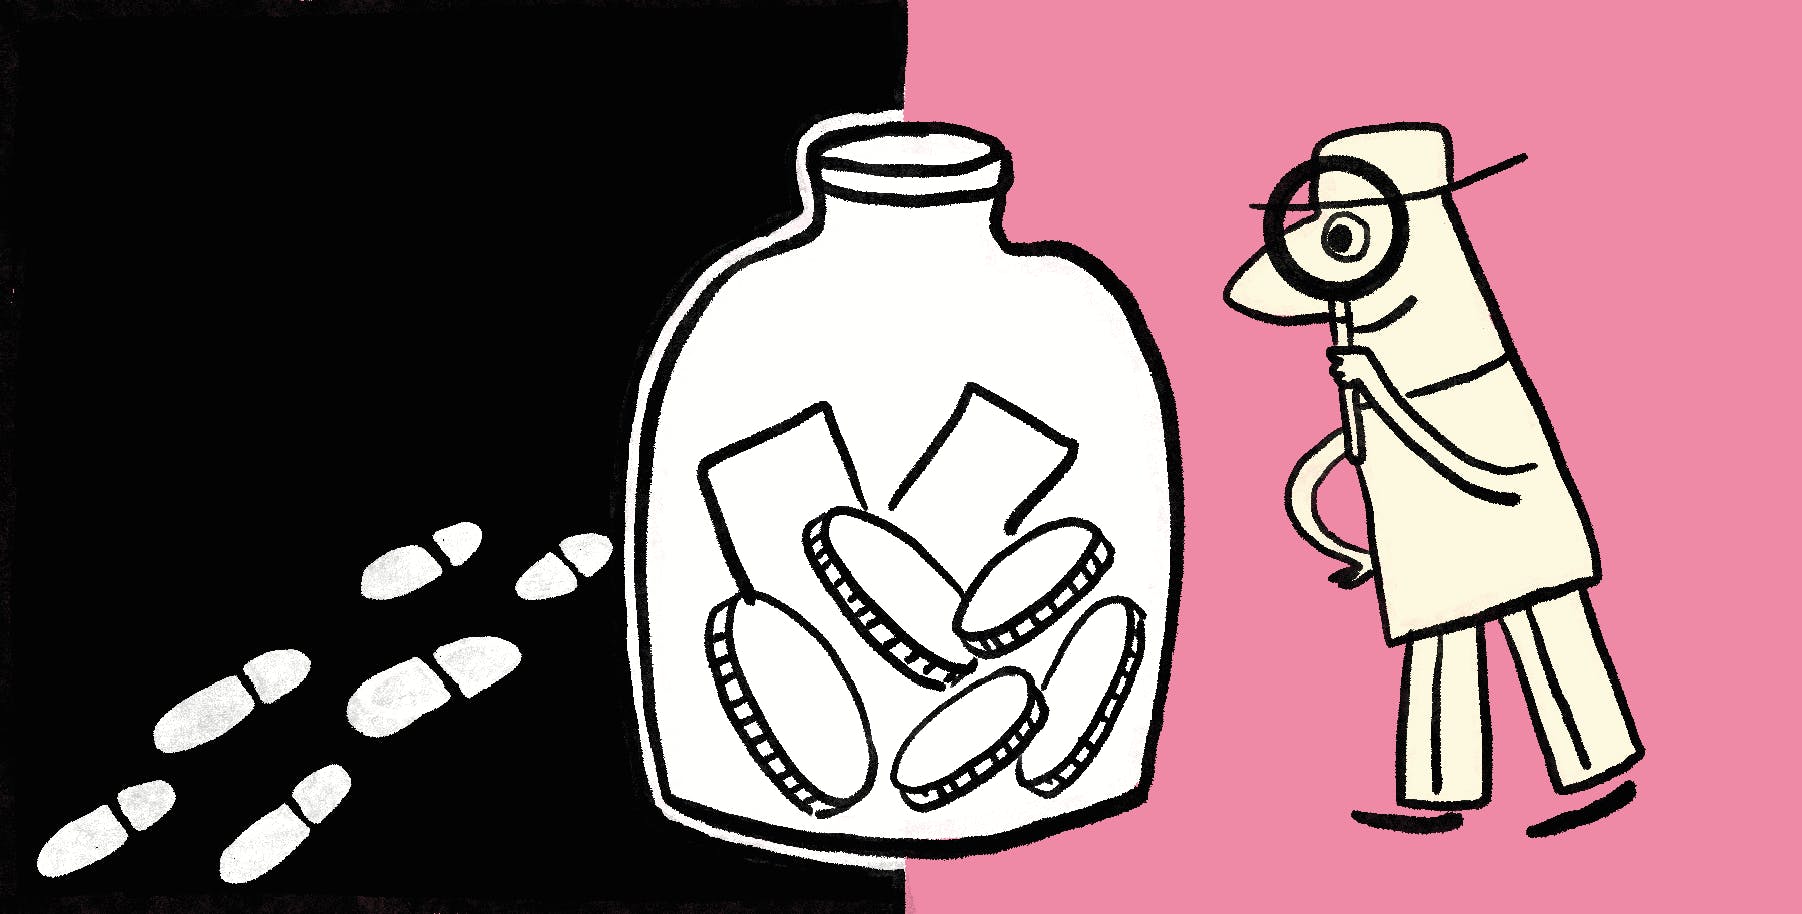 Cartoon taking a look inside a petty cash jar